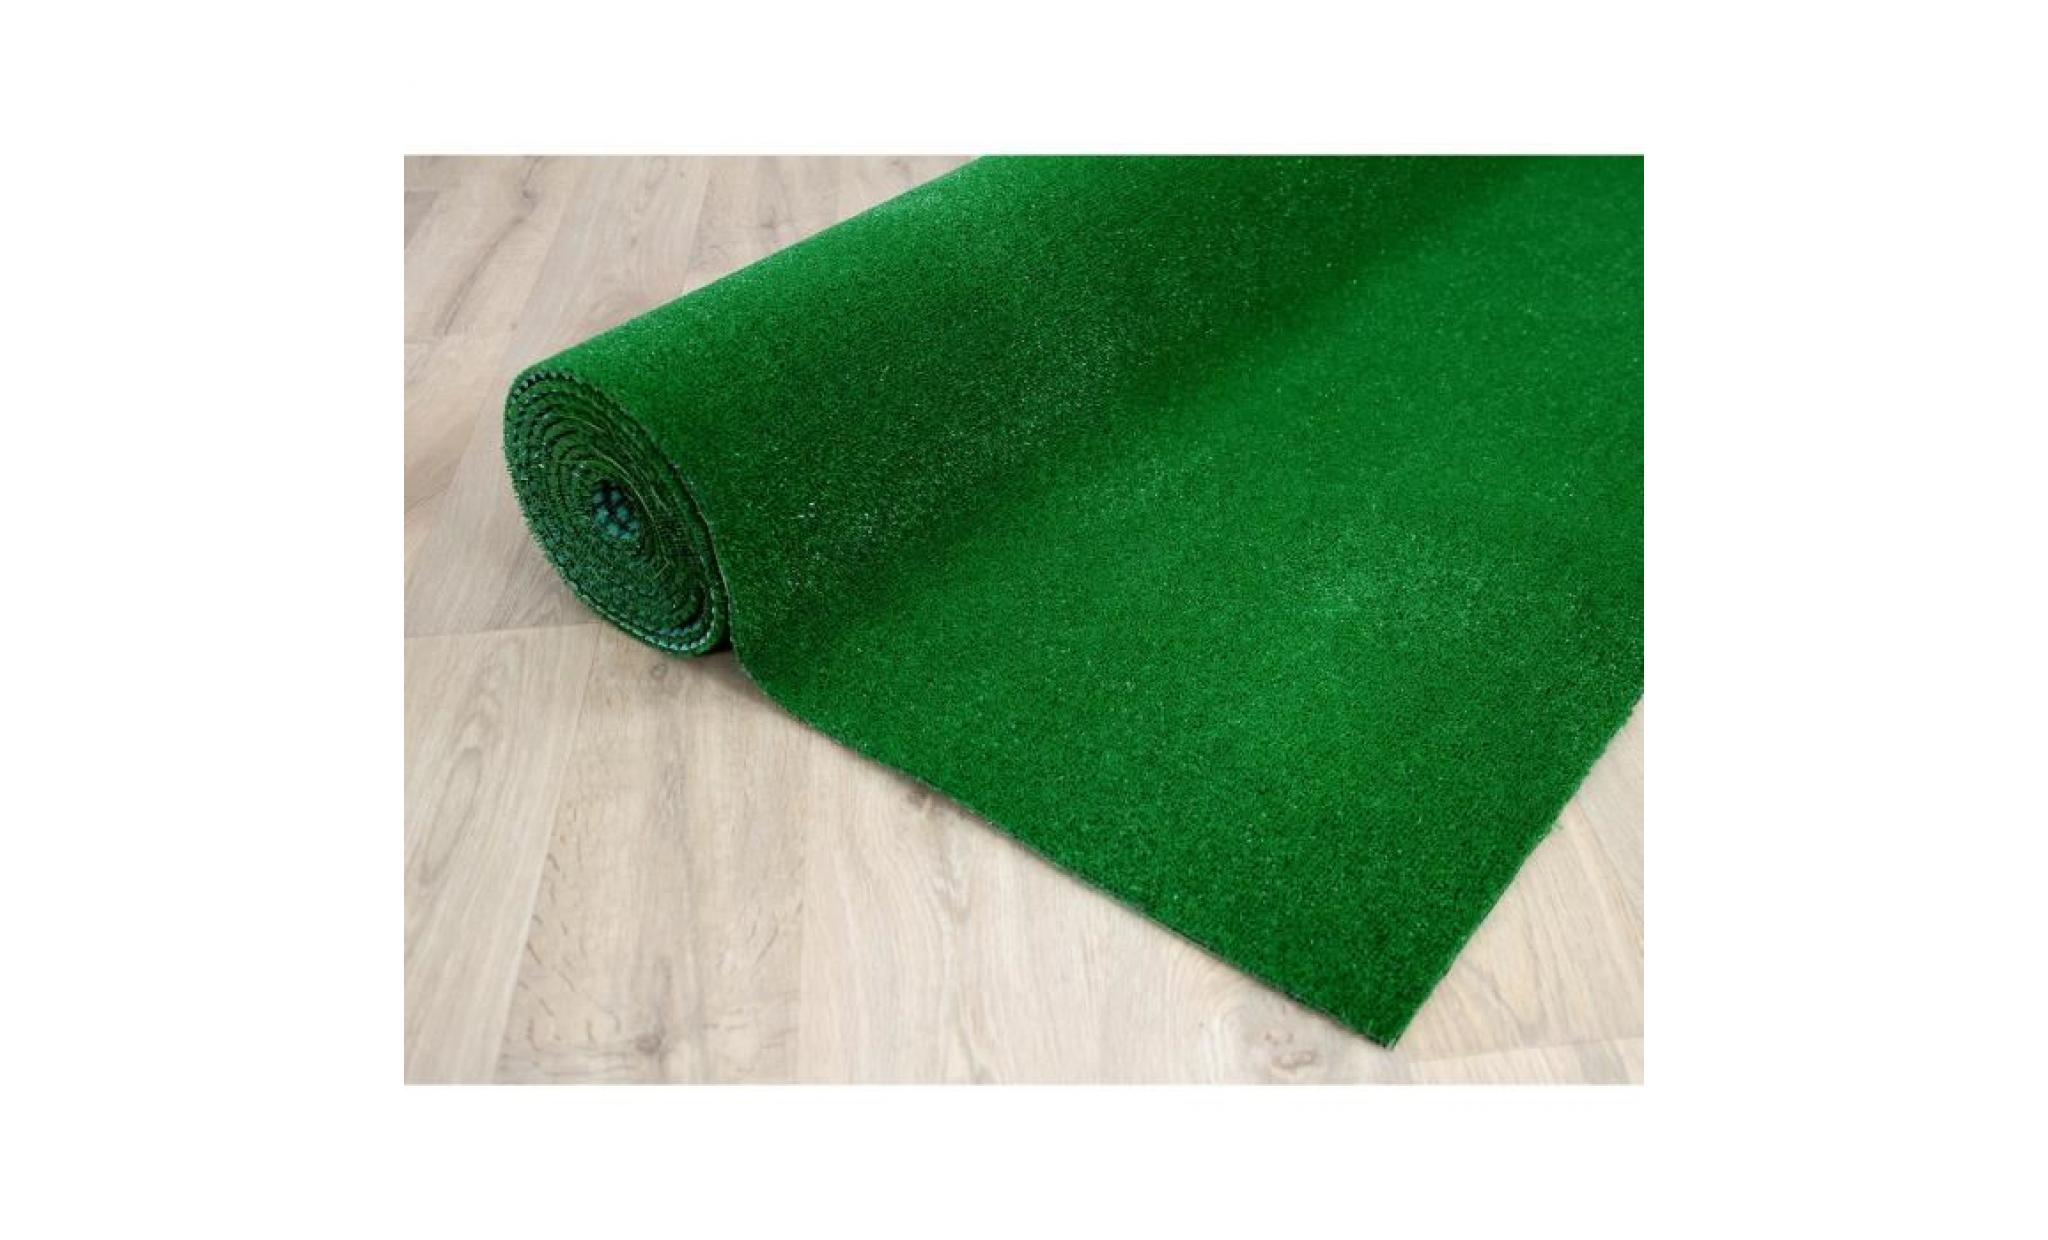 york   tapis type gazon artificiel avec nubs – pour jardin, terrasse, balcon   vert   [400x150 cm]